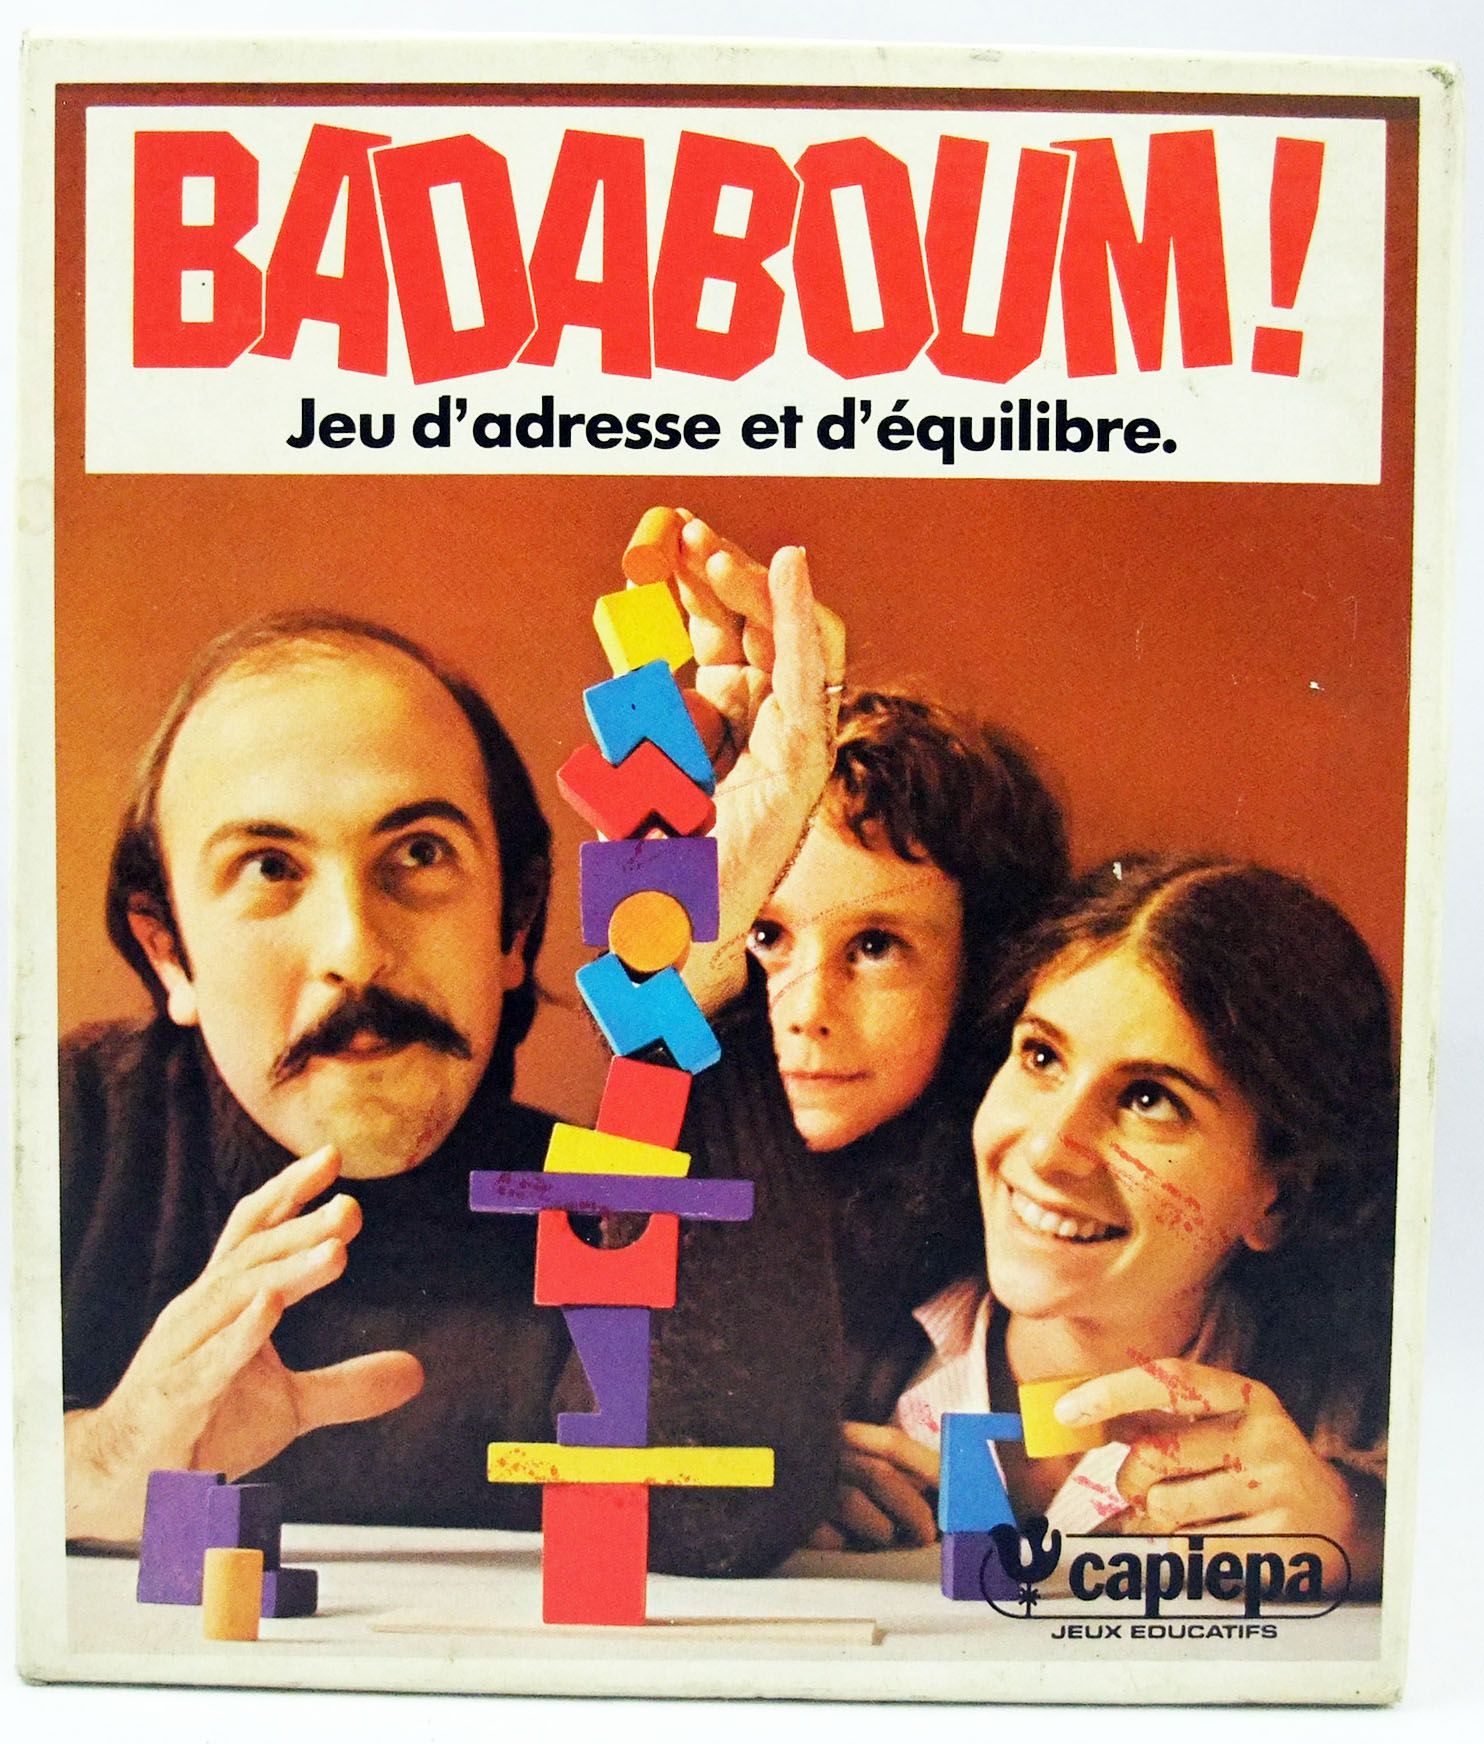 badaboum----skill-game---capiepa-1977-p-image-415789-grande.jpg